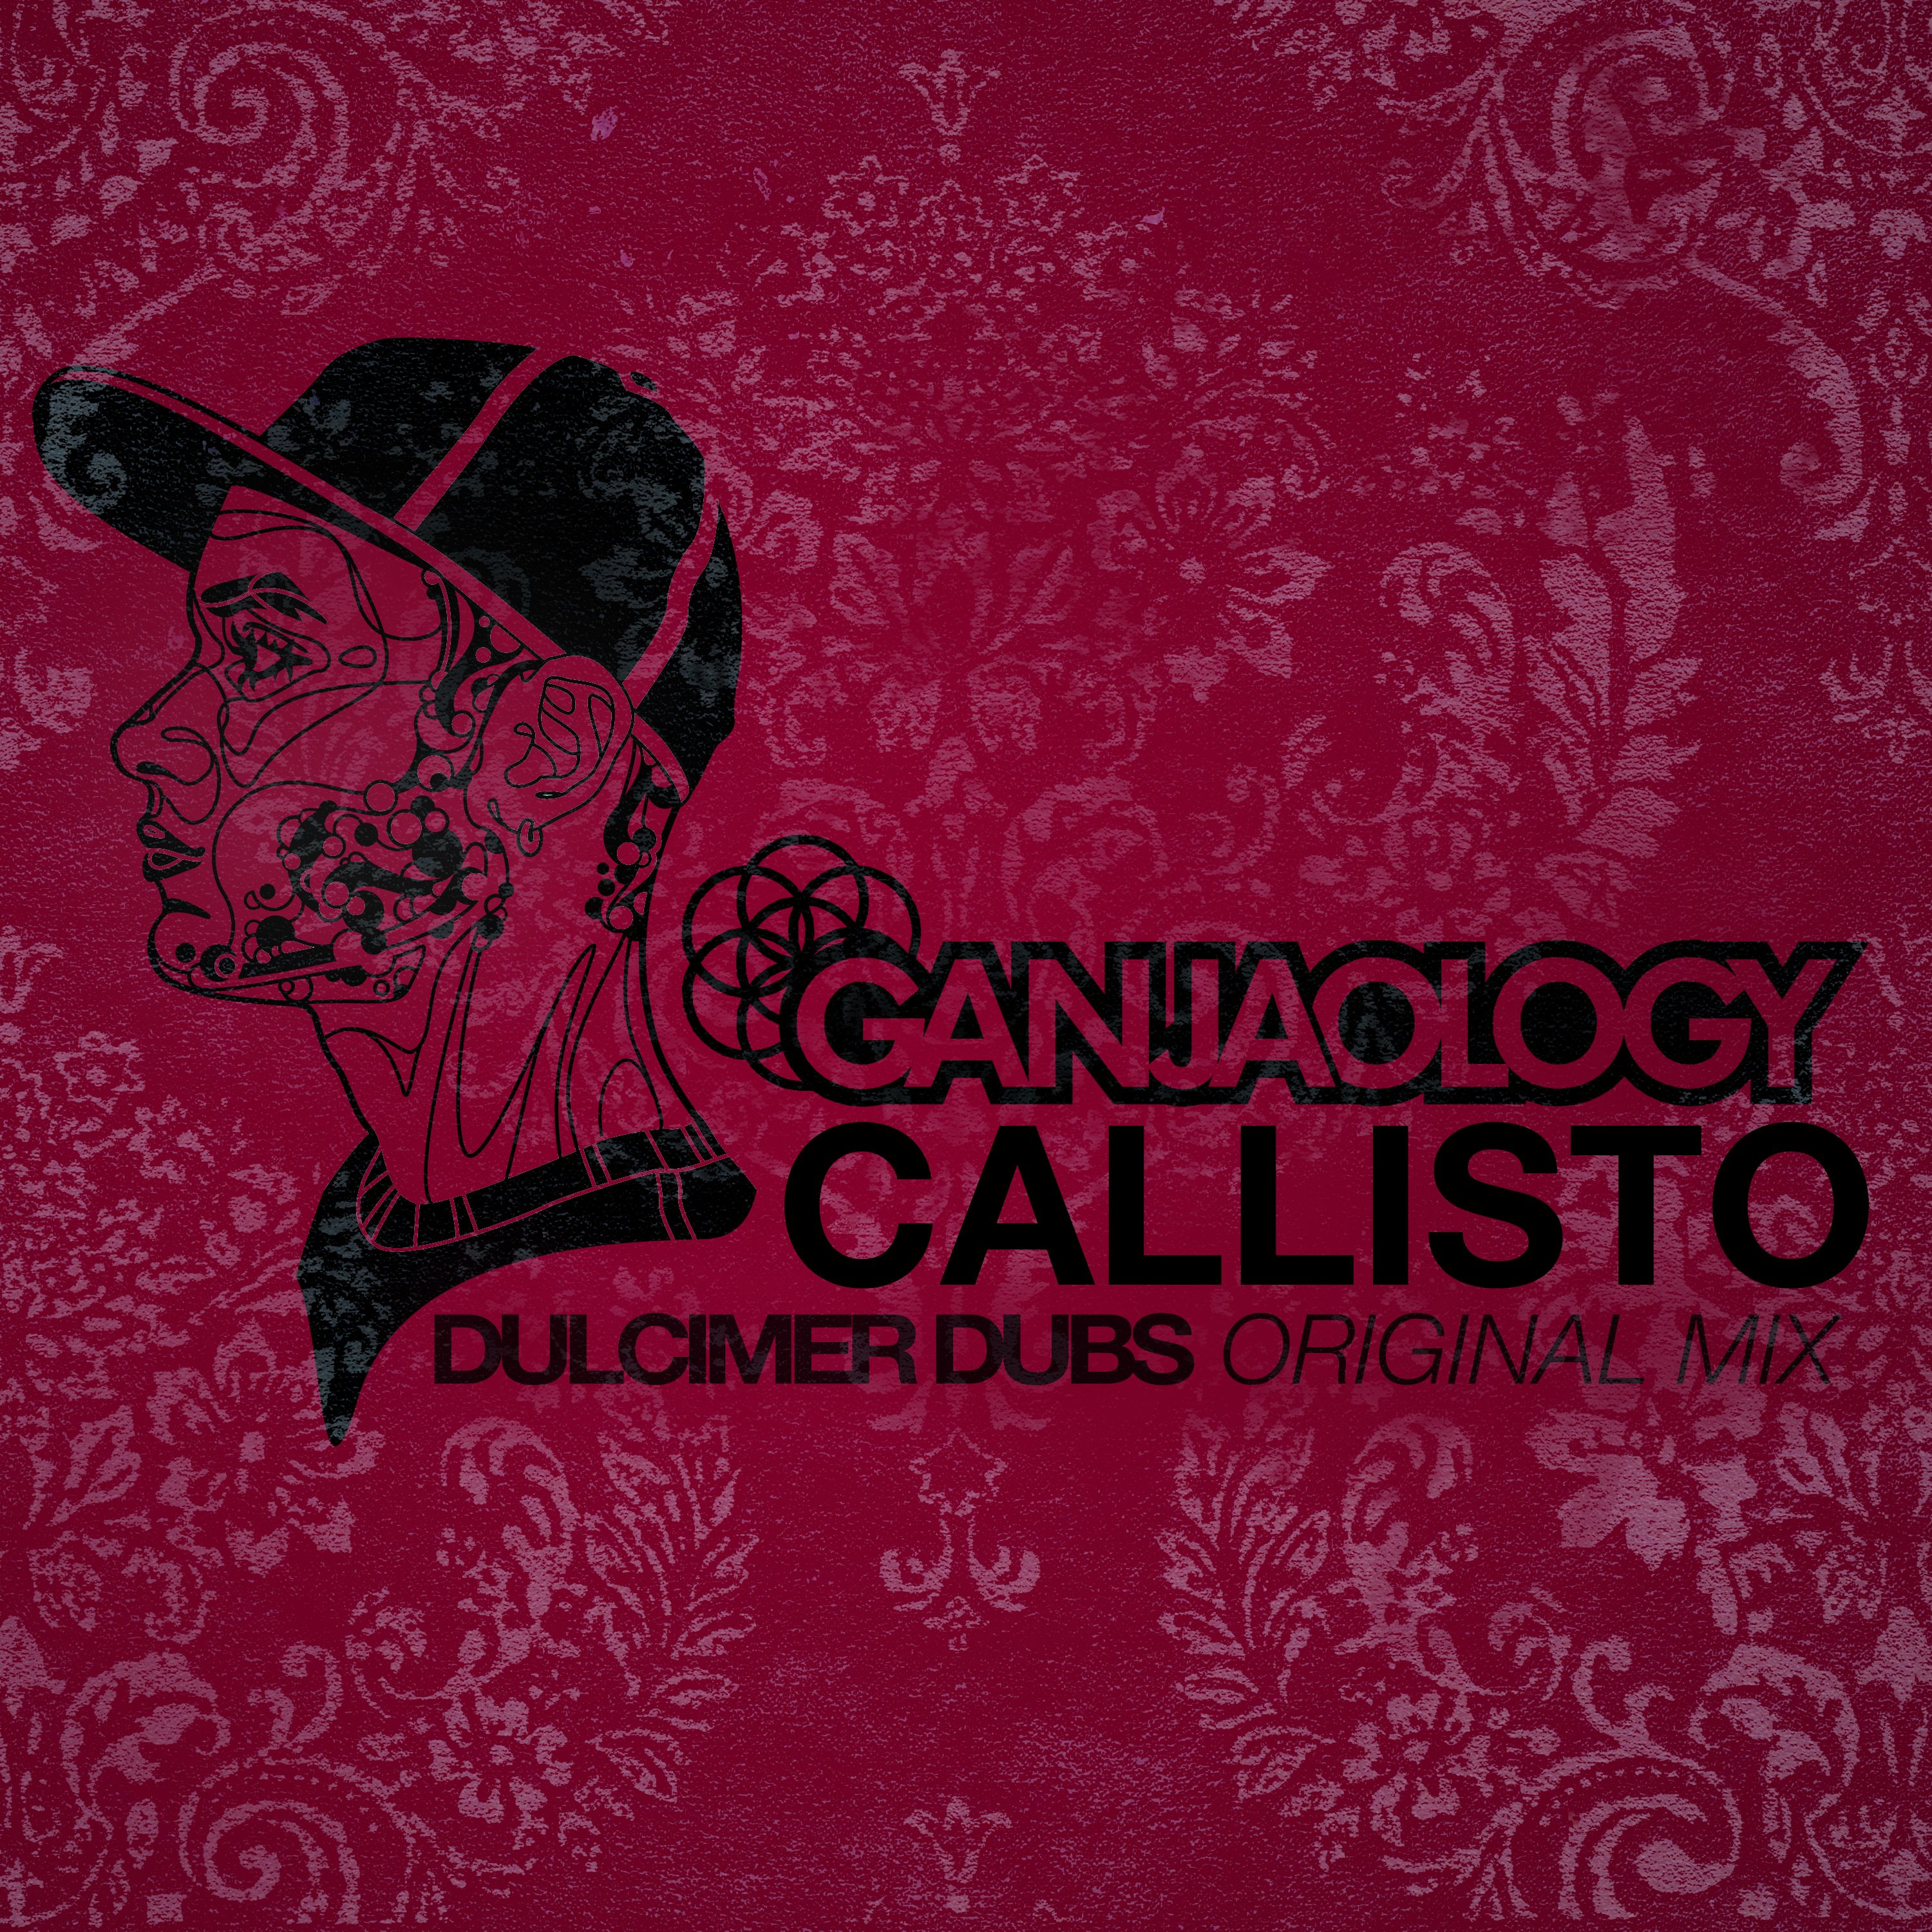 The Ganjaologist, Callisto, Nigel Peligree, Dulcimer Dubs, Ganjaology